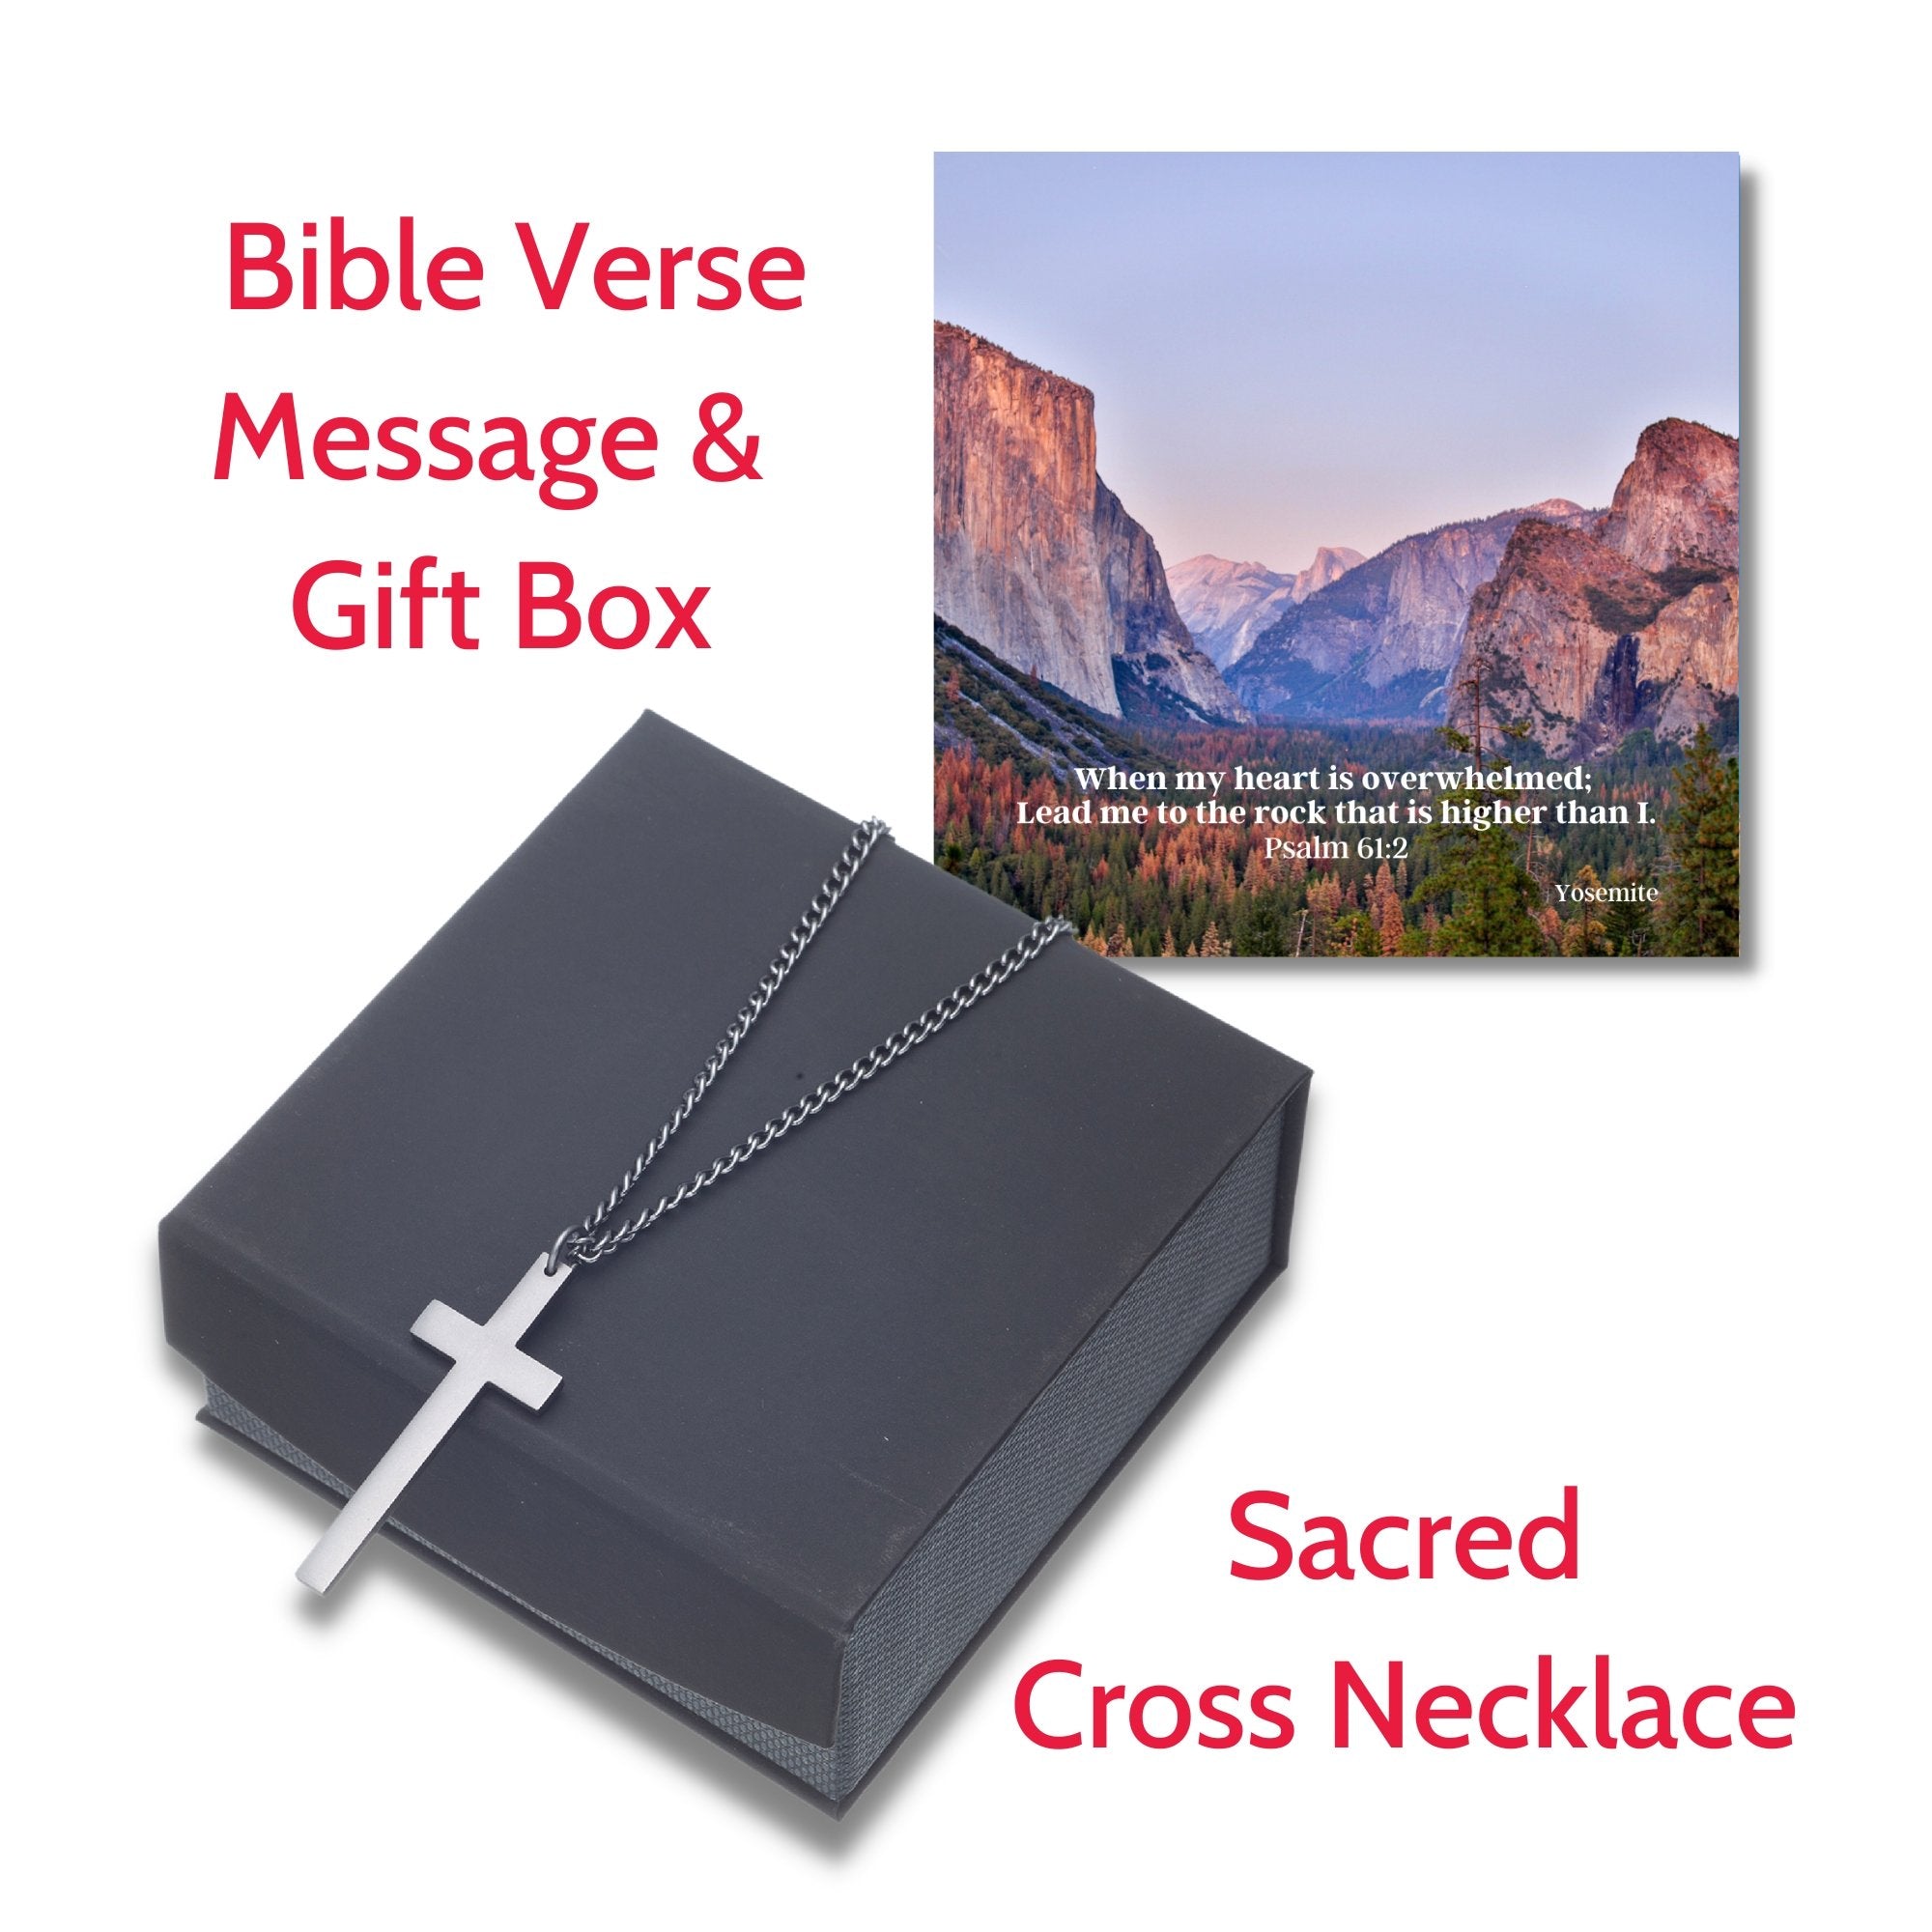 Sacred Cross Necklace, Bible Verse Psalm 61:2, Yosemite